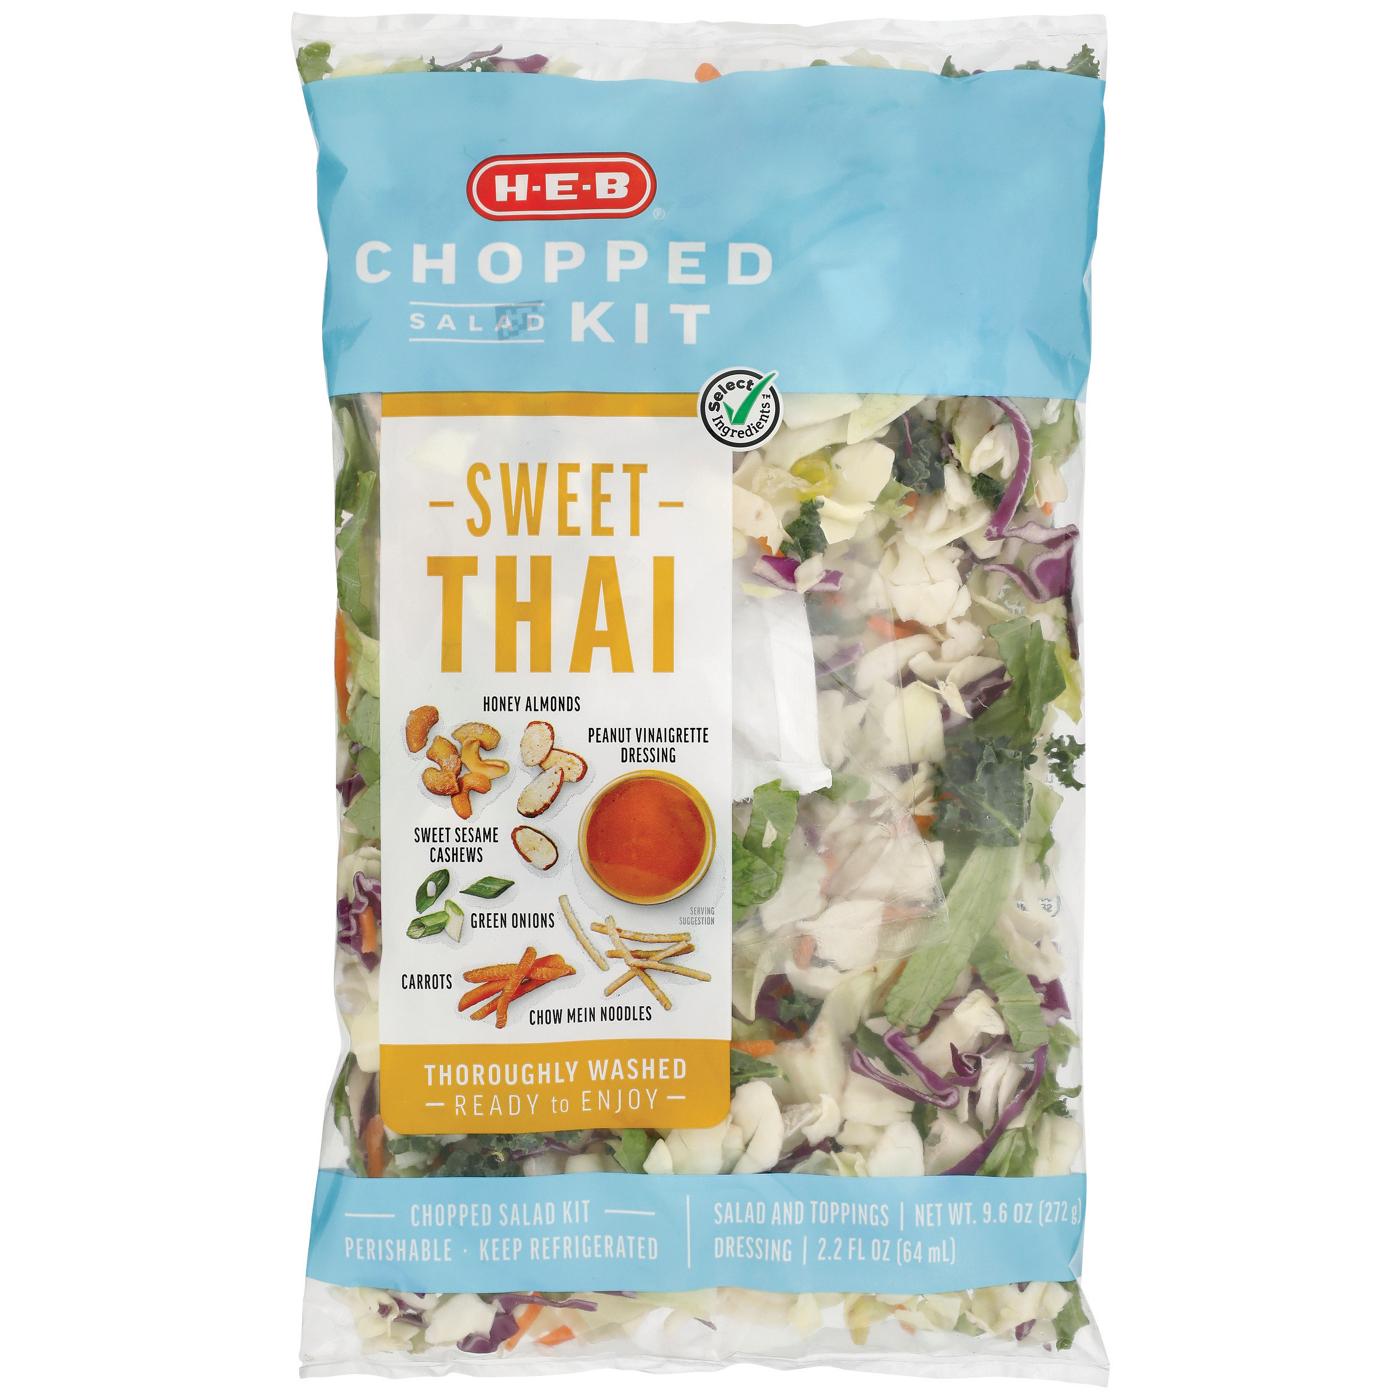 H-E-B Chopped Salad Kit - Sweet Thai; image 1 of 5